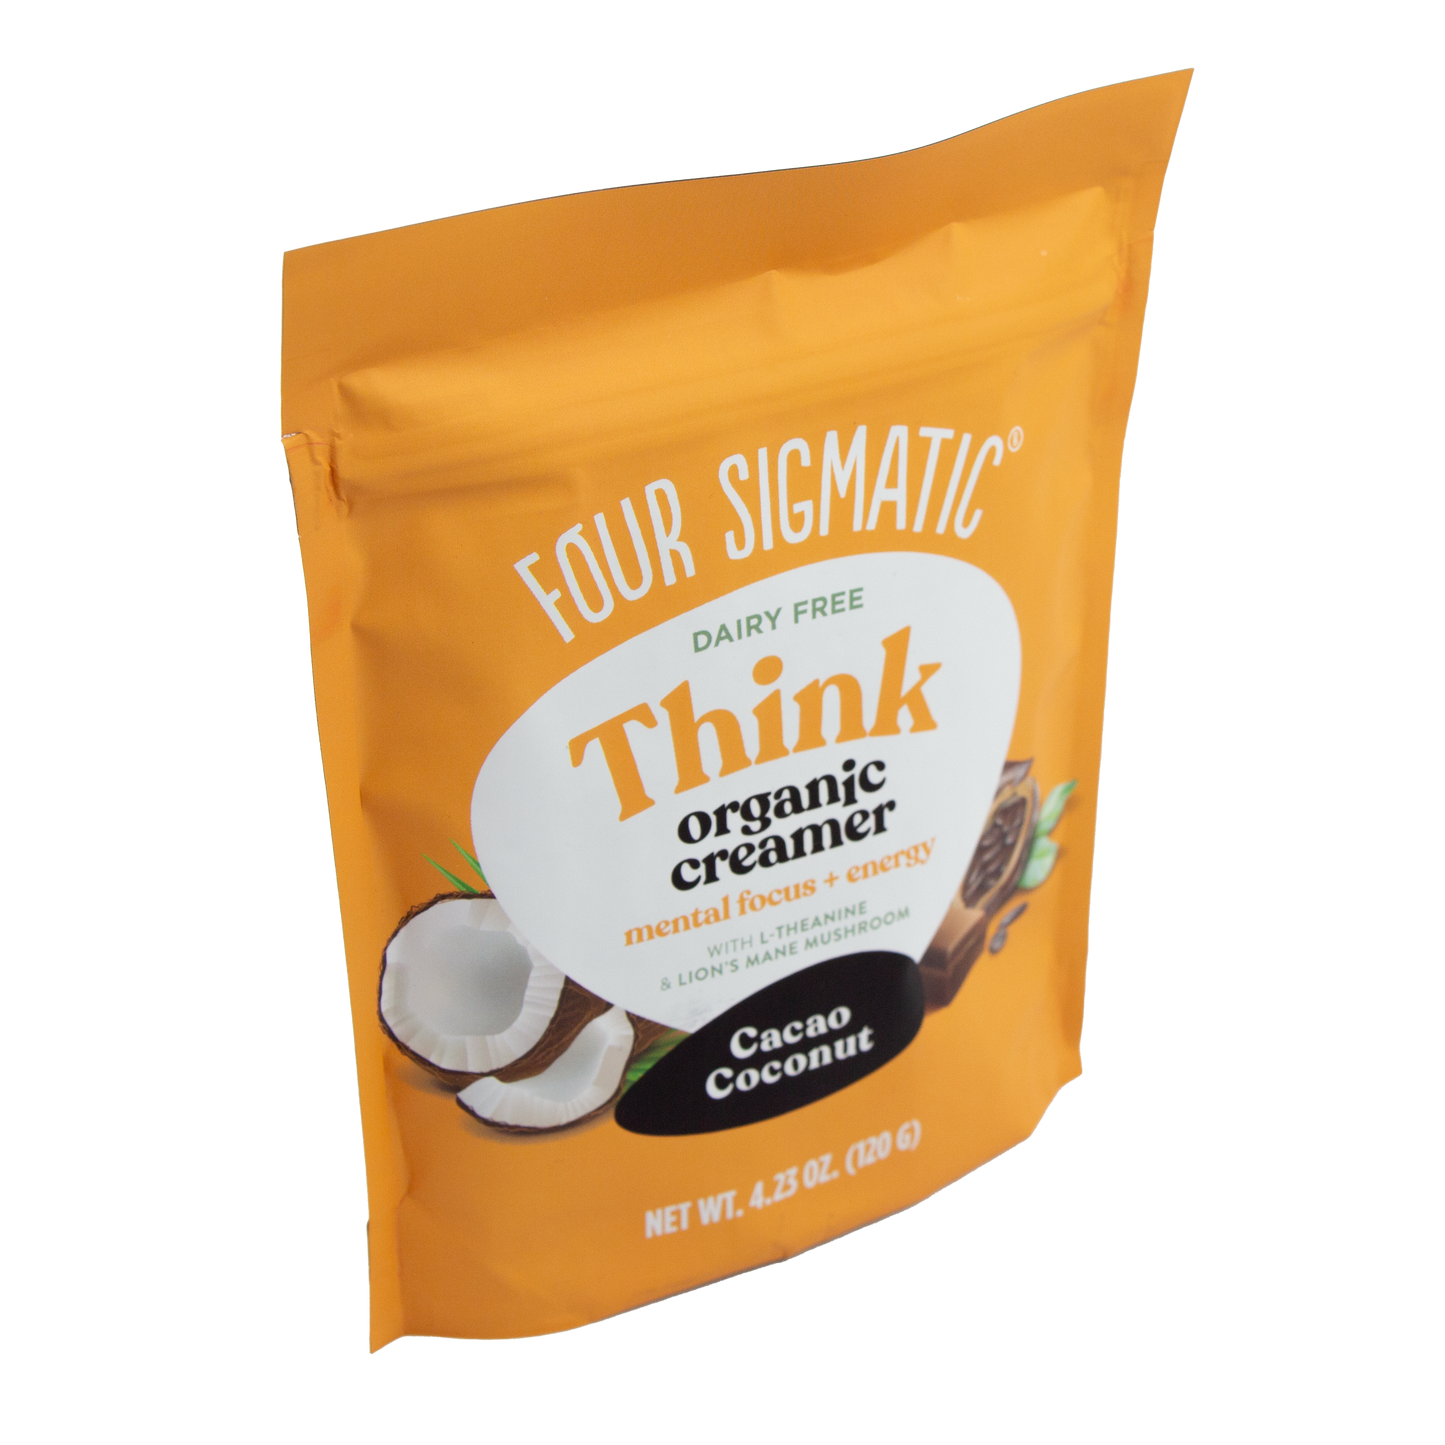 Four Stigmatic - Think Organic Creamer - Cacao Coconut